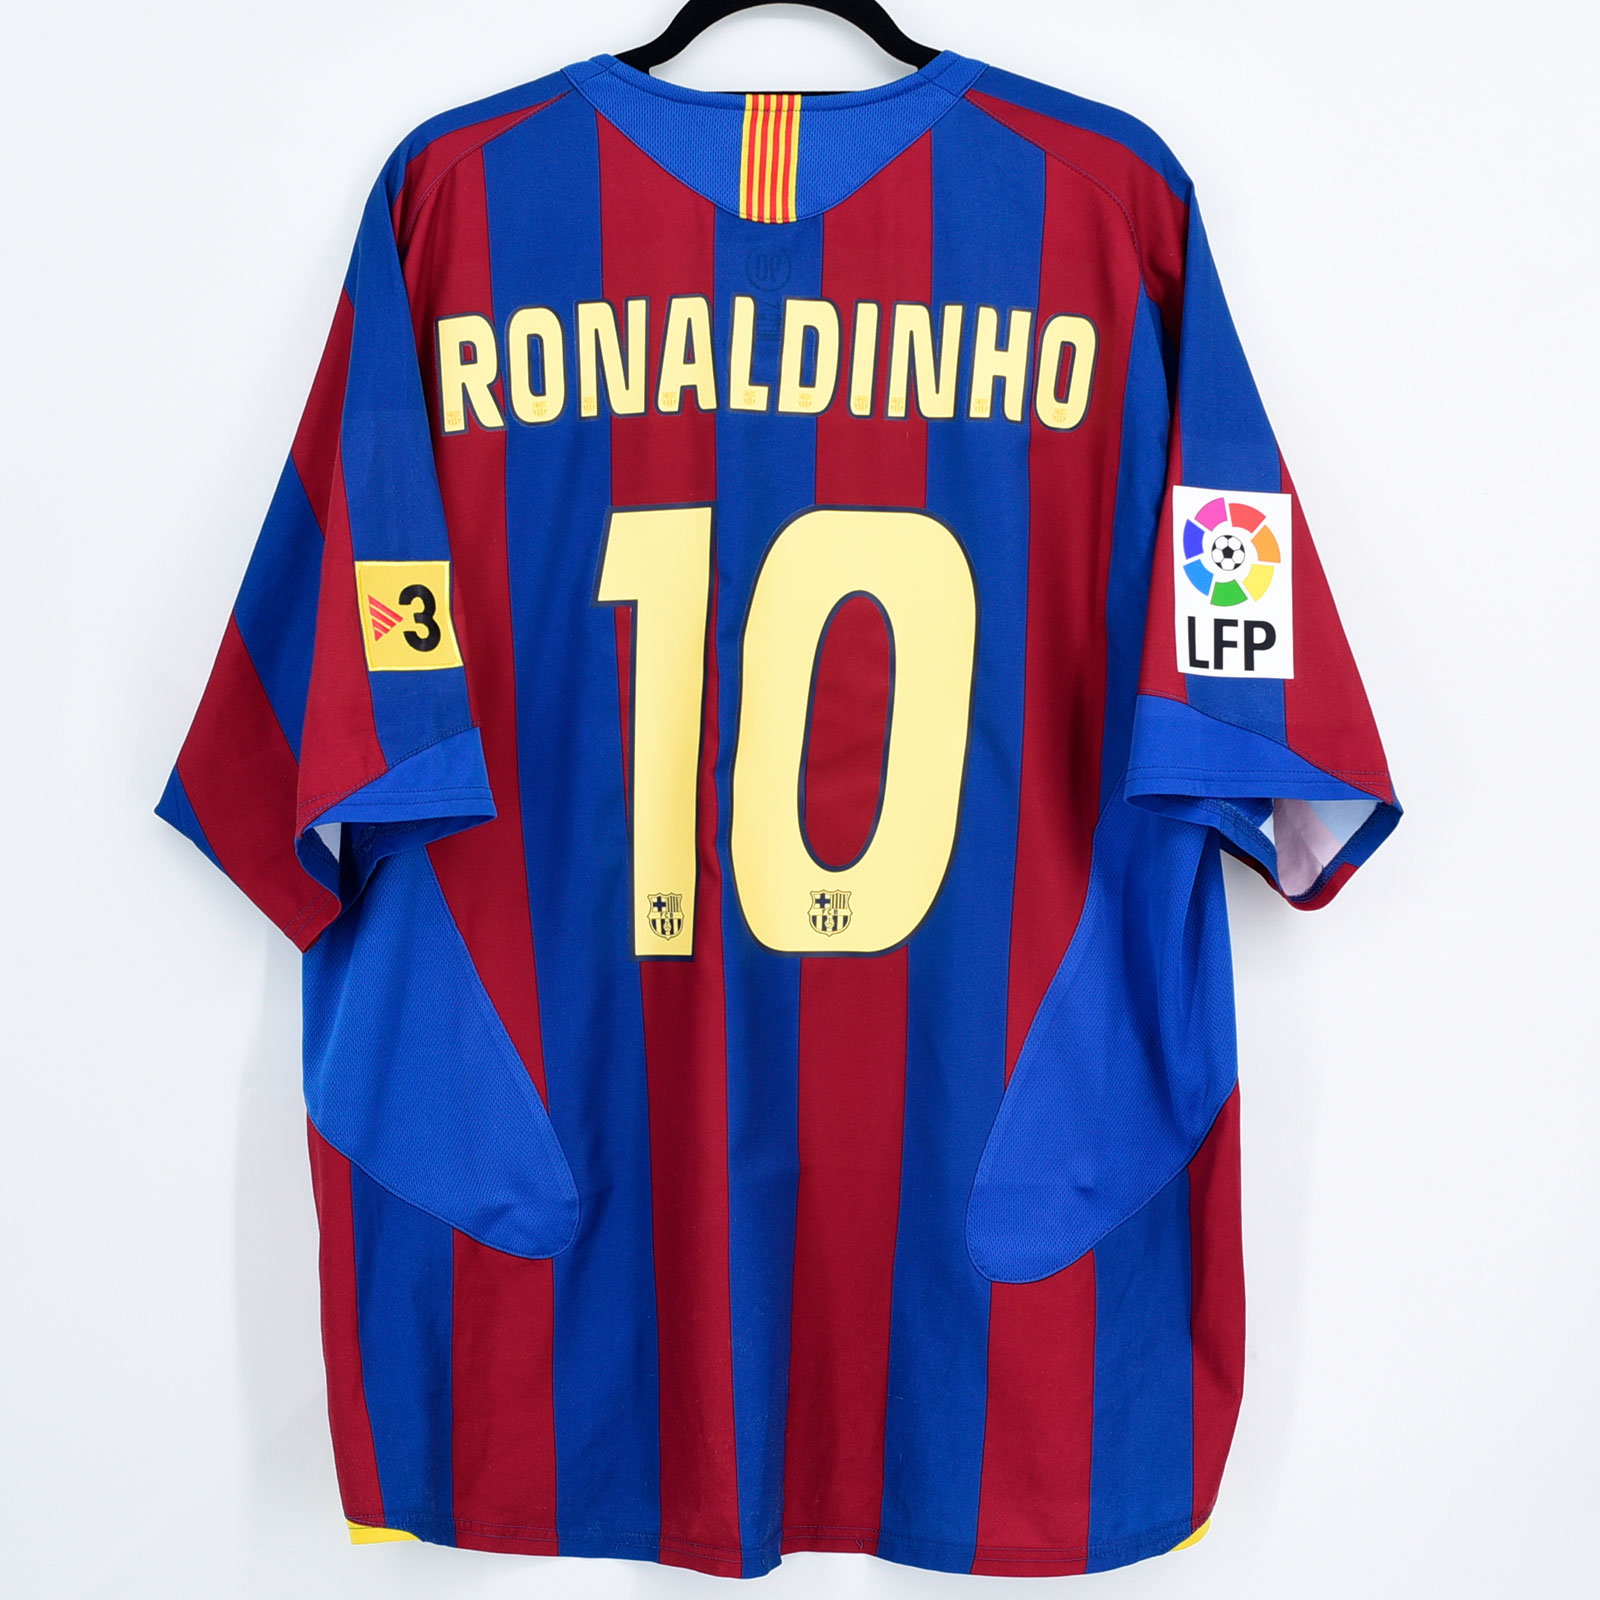 ronaldinho jersey number barcelona